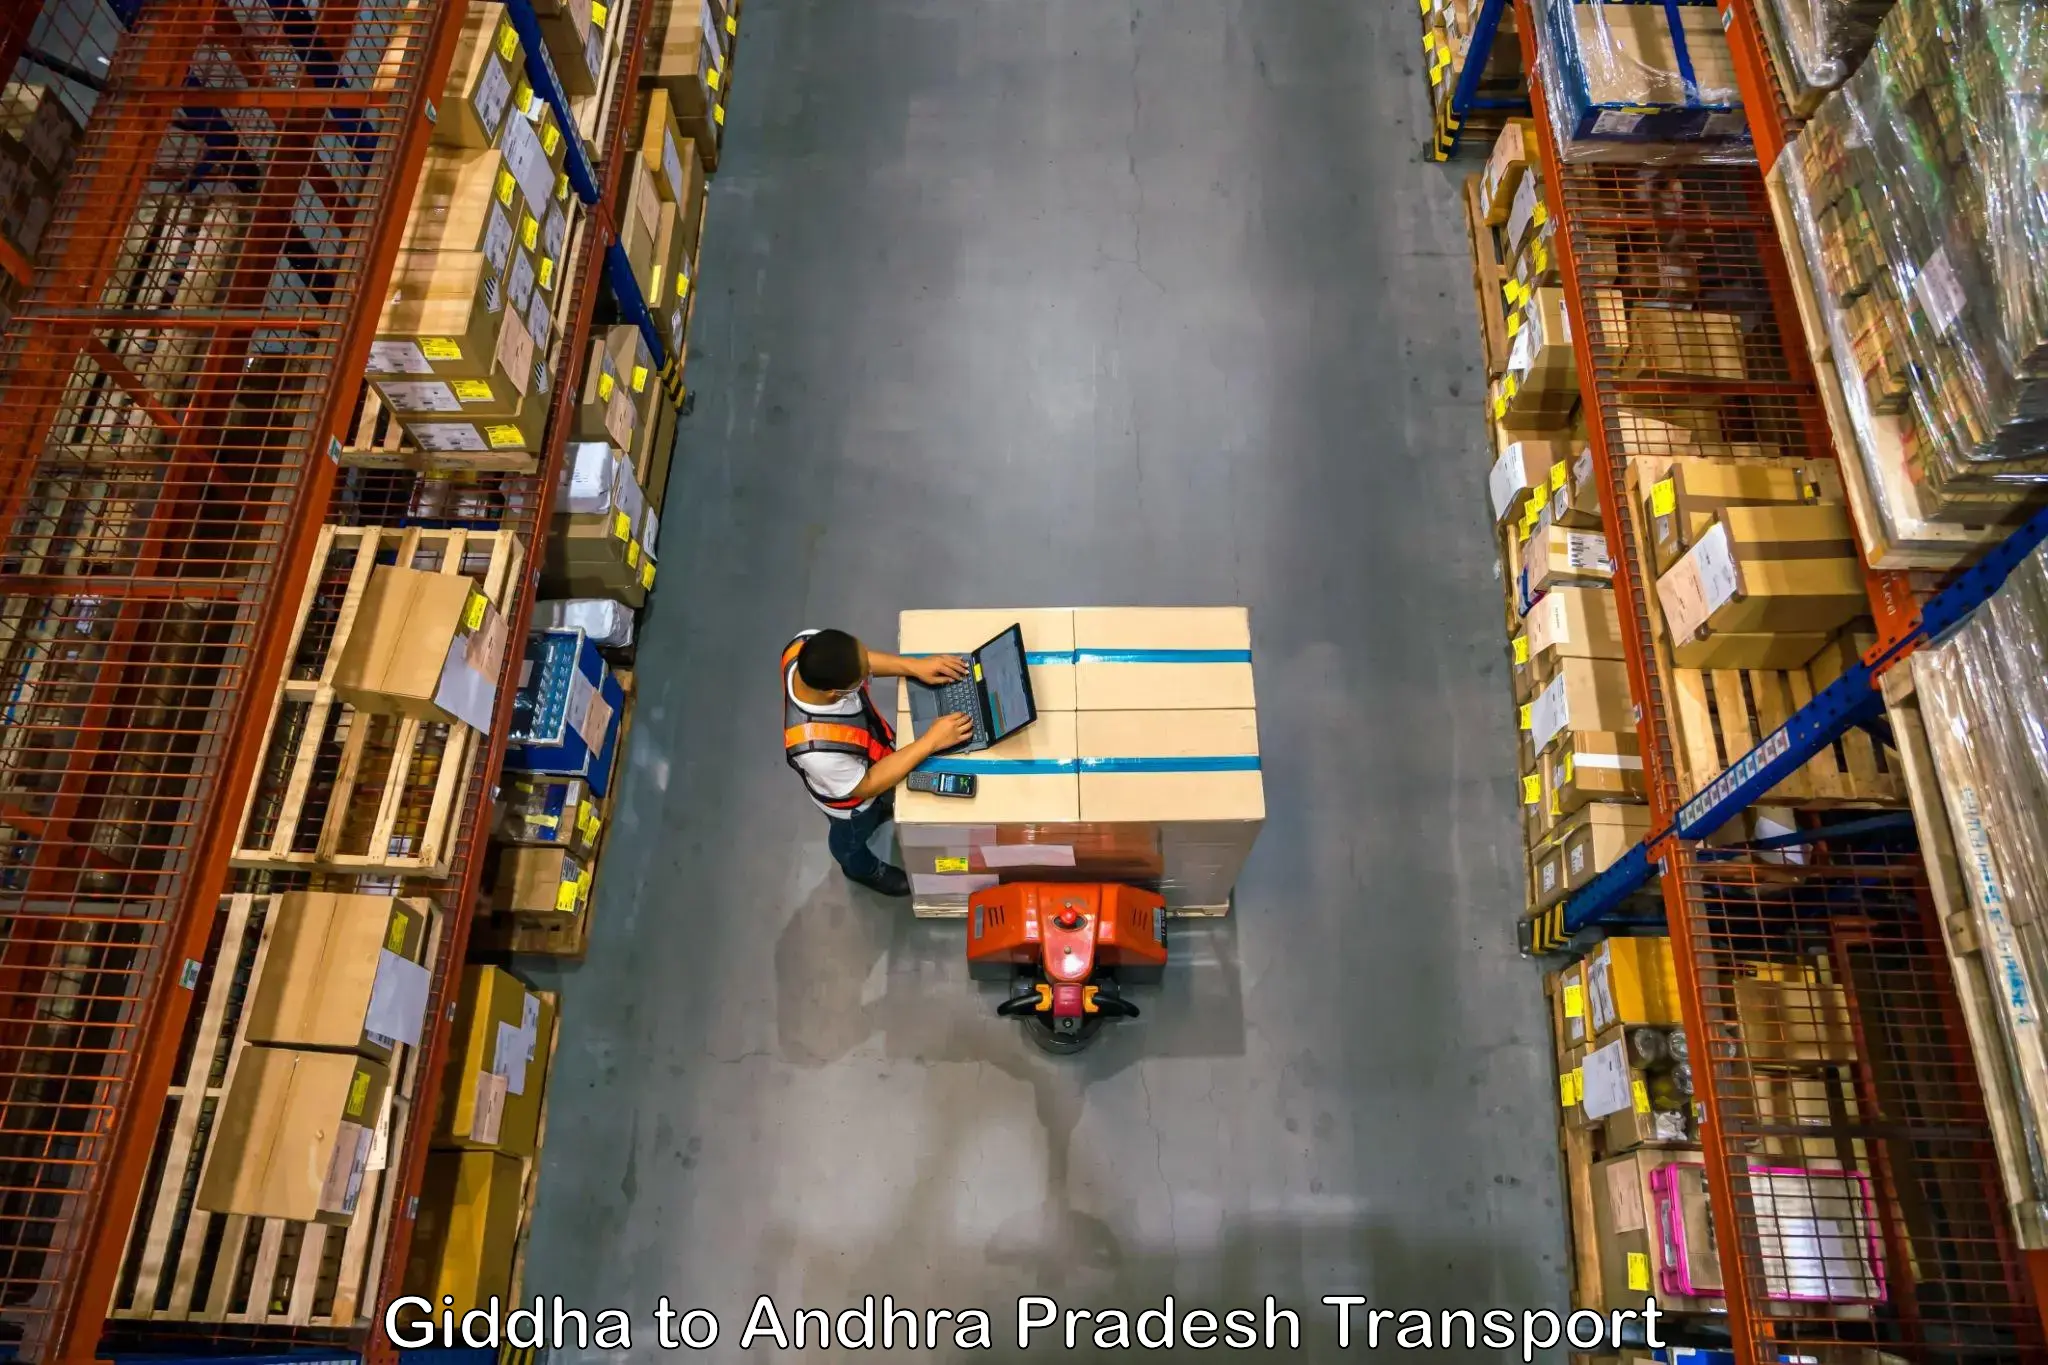 Shipping partner Giddha to Gajapathinagaram